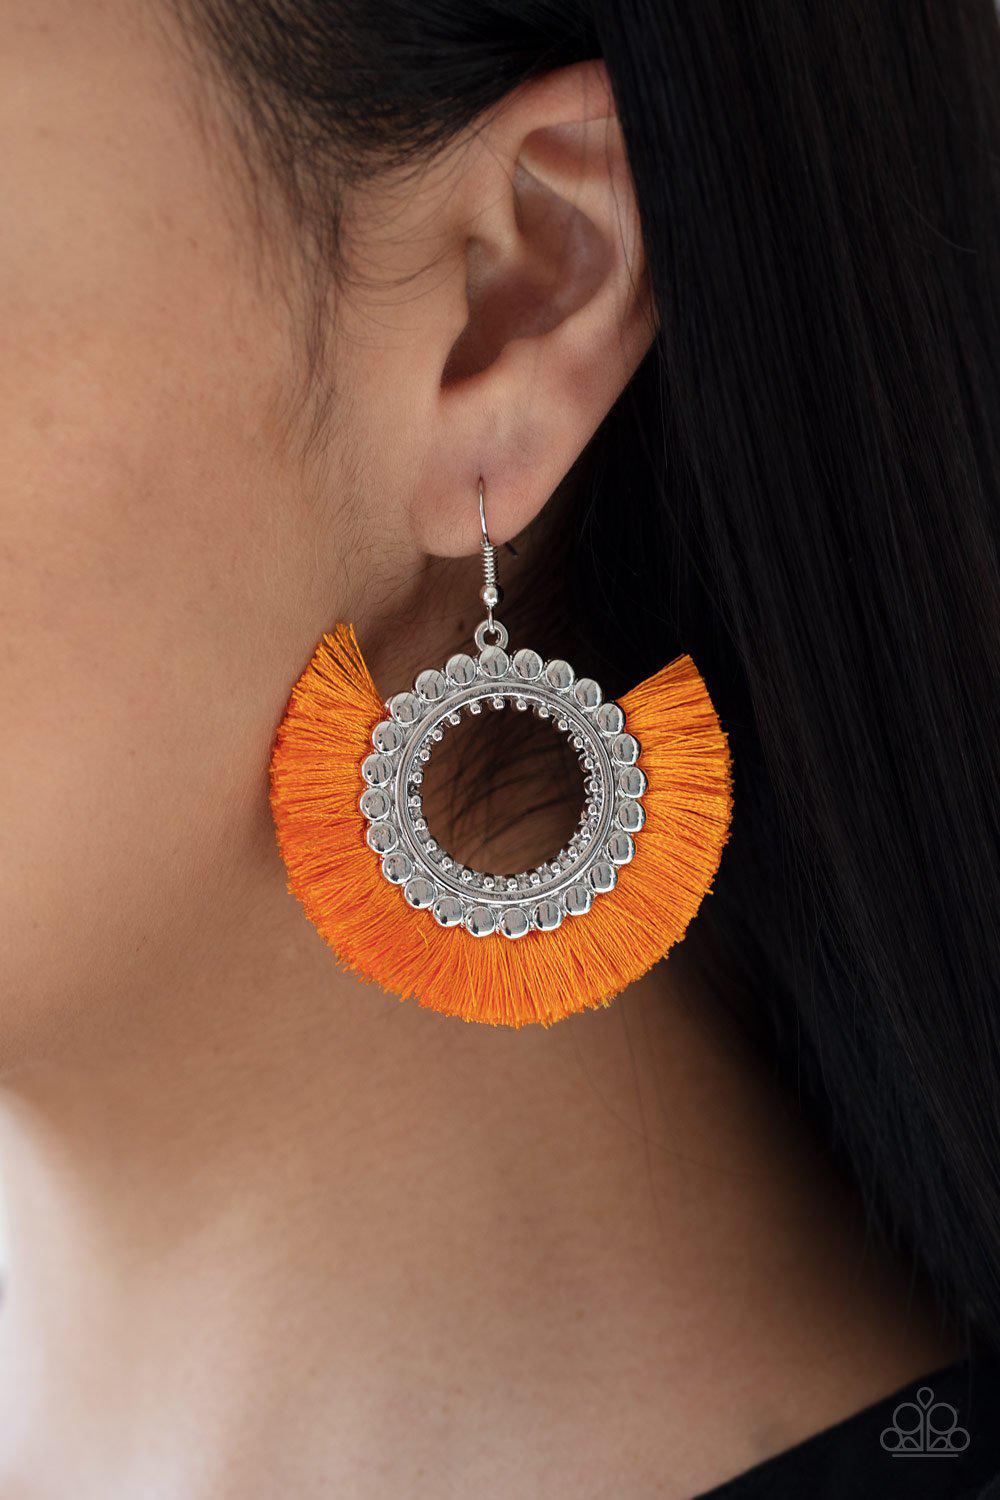 Fringe Fanatic Neon Orange Fringe Earrings - Paparazzi Accessories-CarasShop.com - $5 Jewelry by Cara Jewels